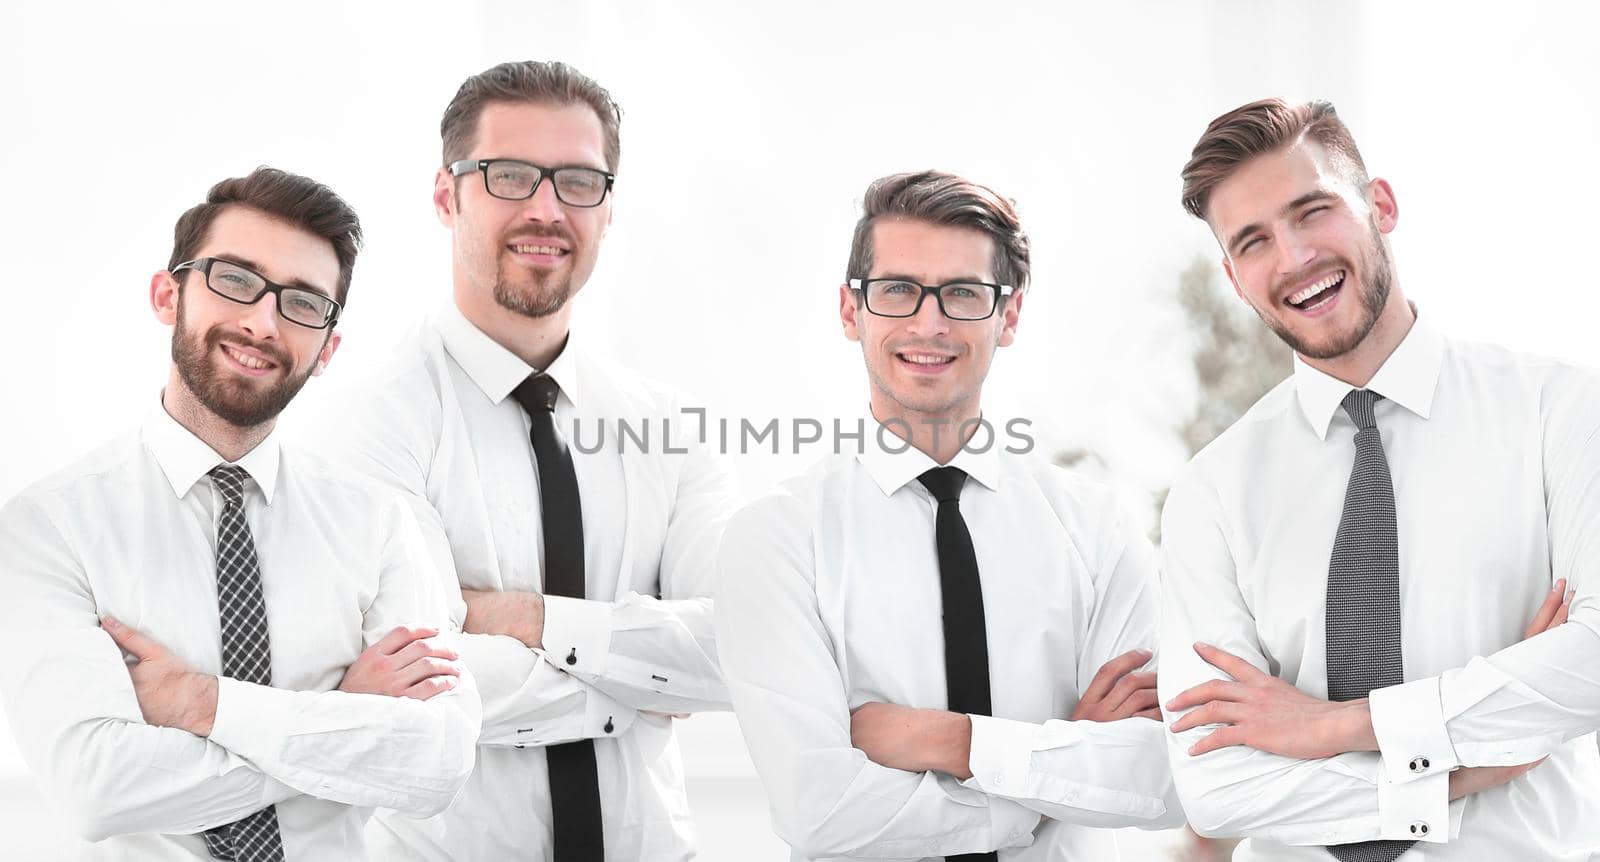 portrait of a successful business team standing near the desktop.the concept of teamwork